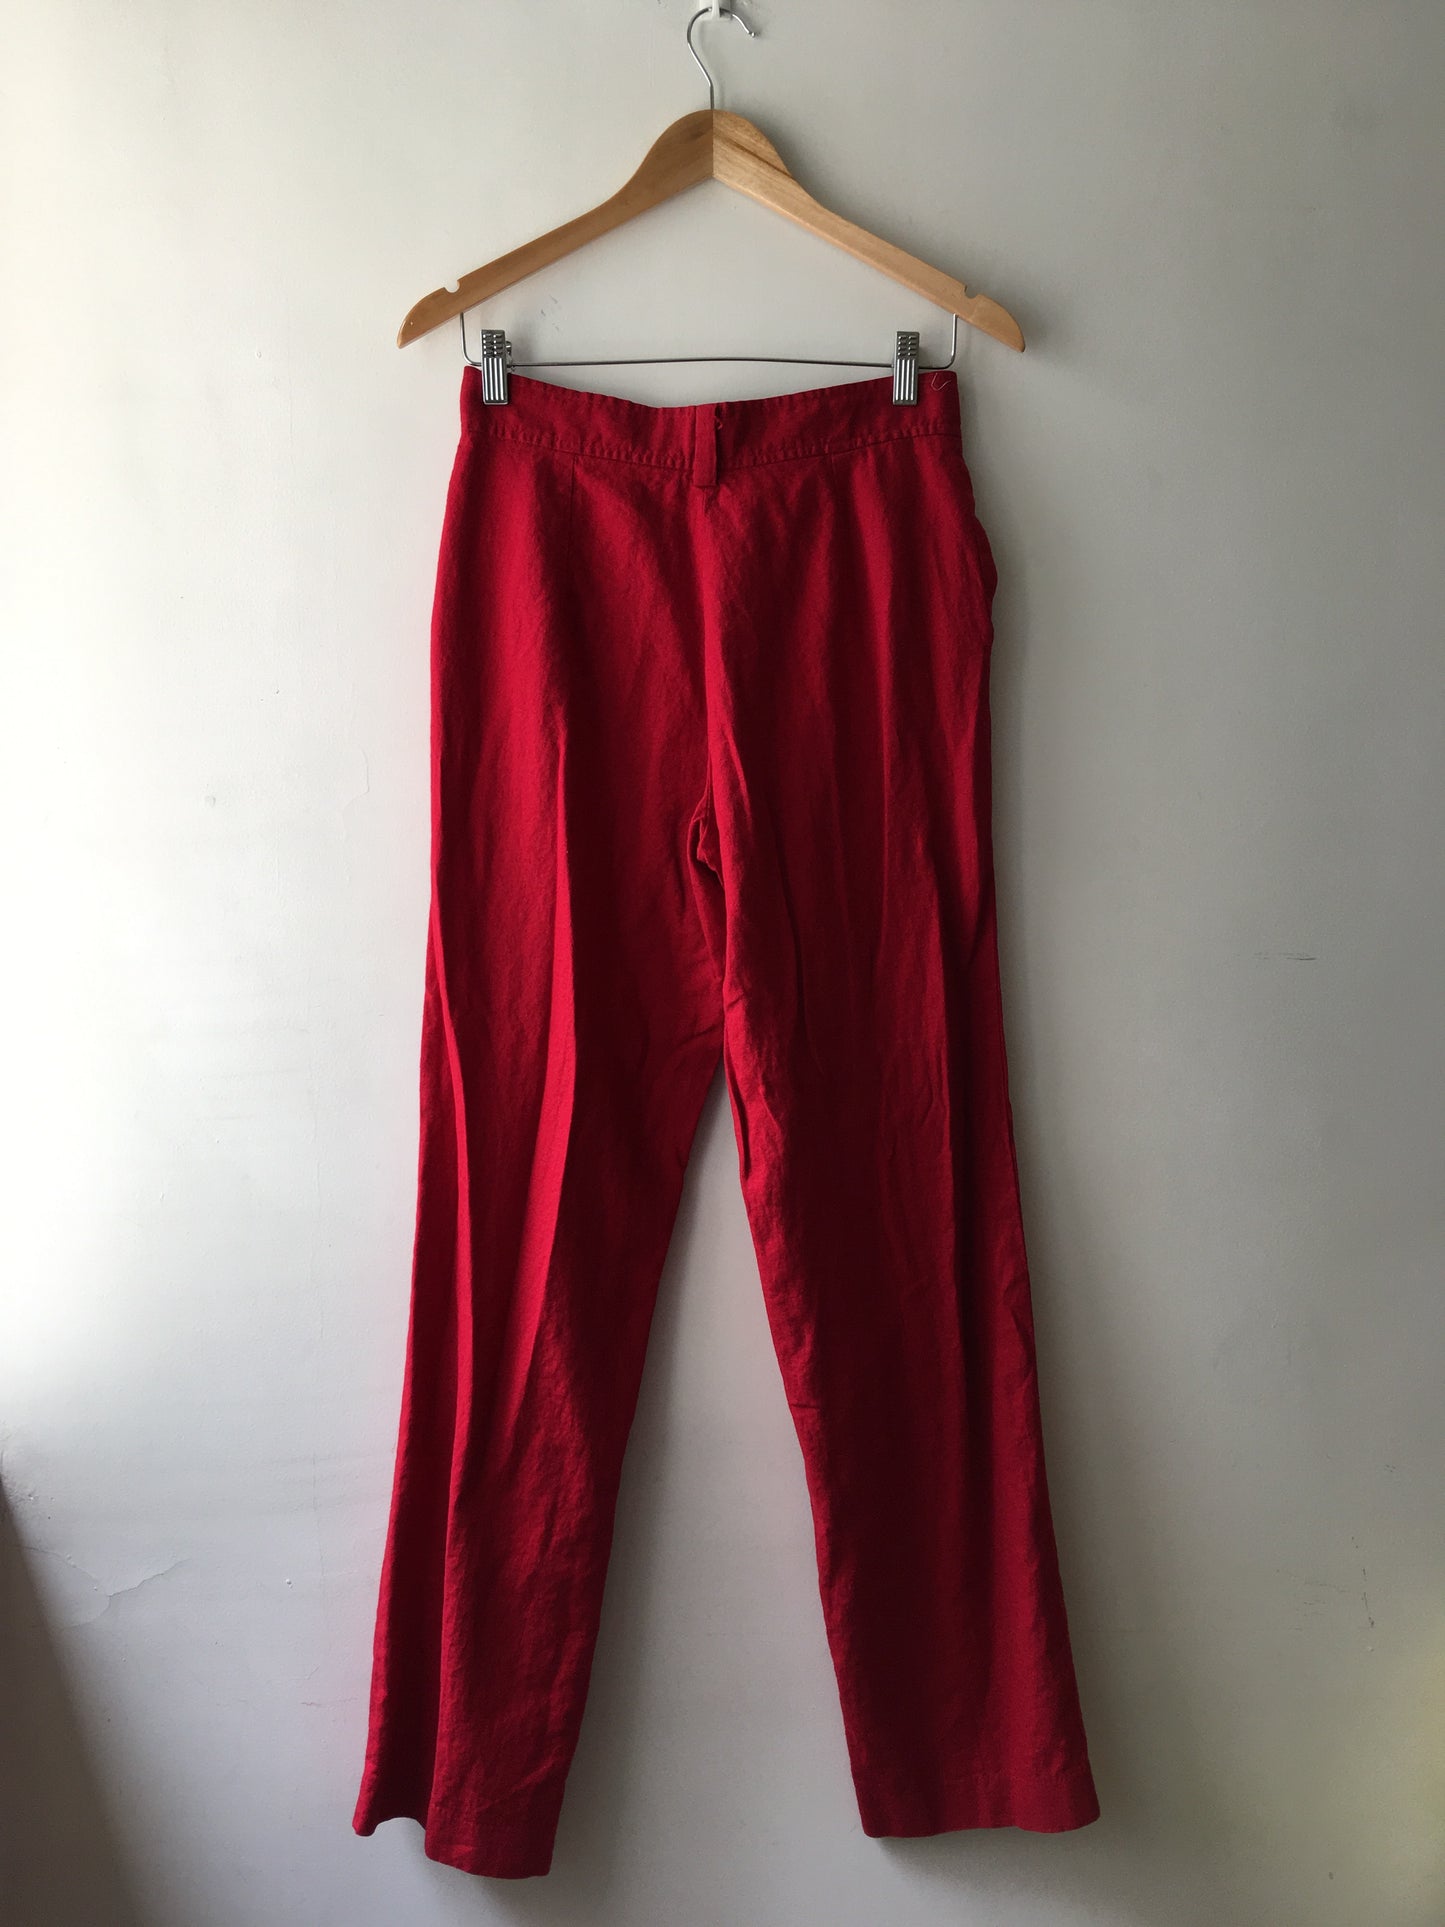 Chidx Red Pants